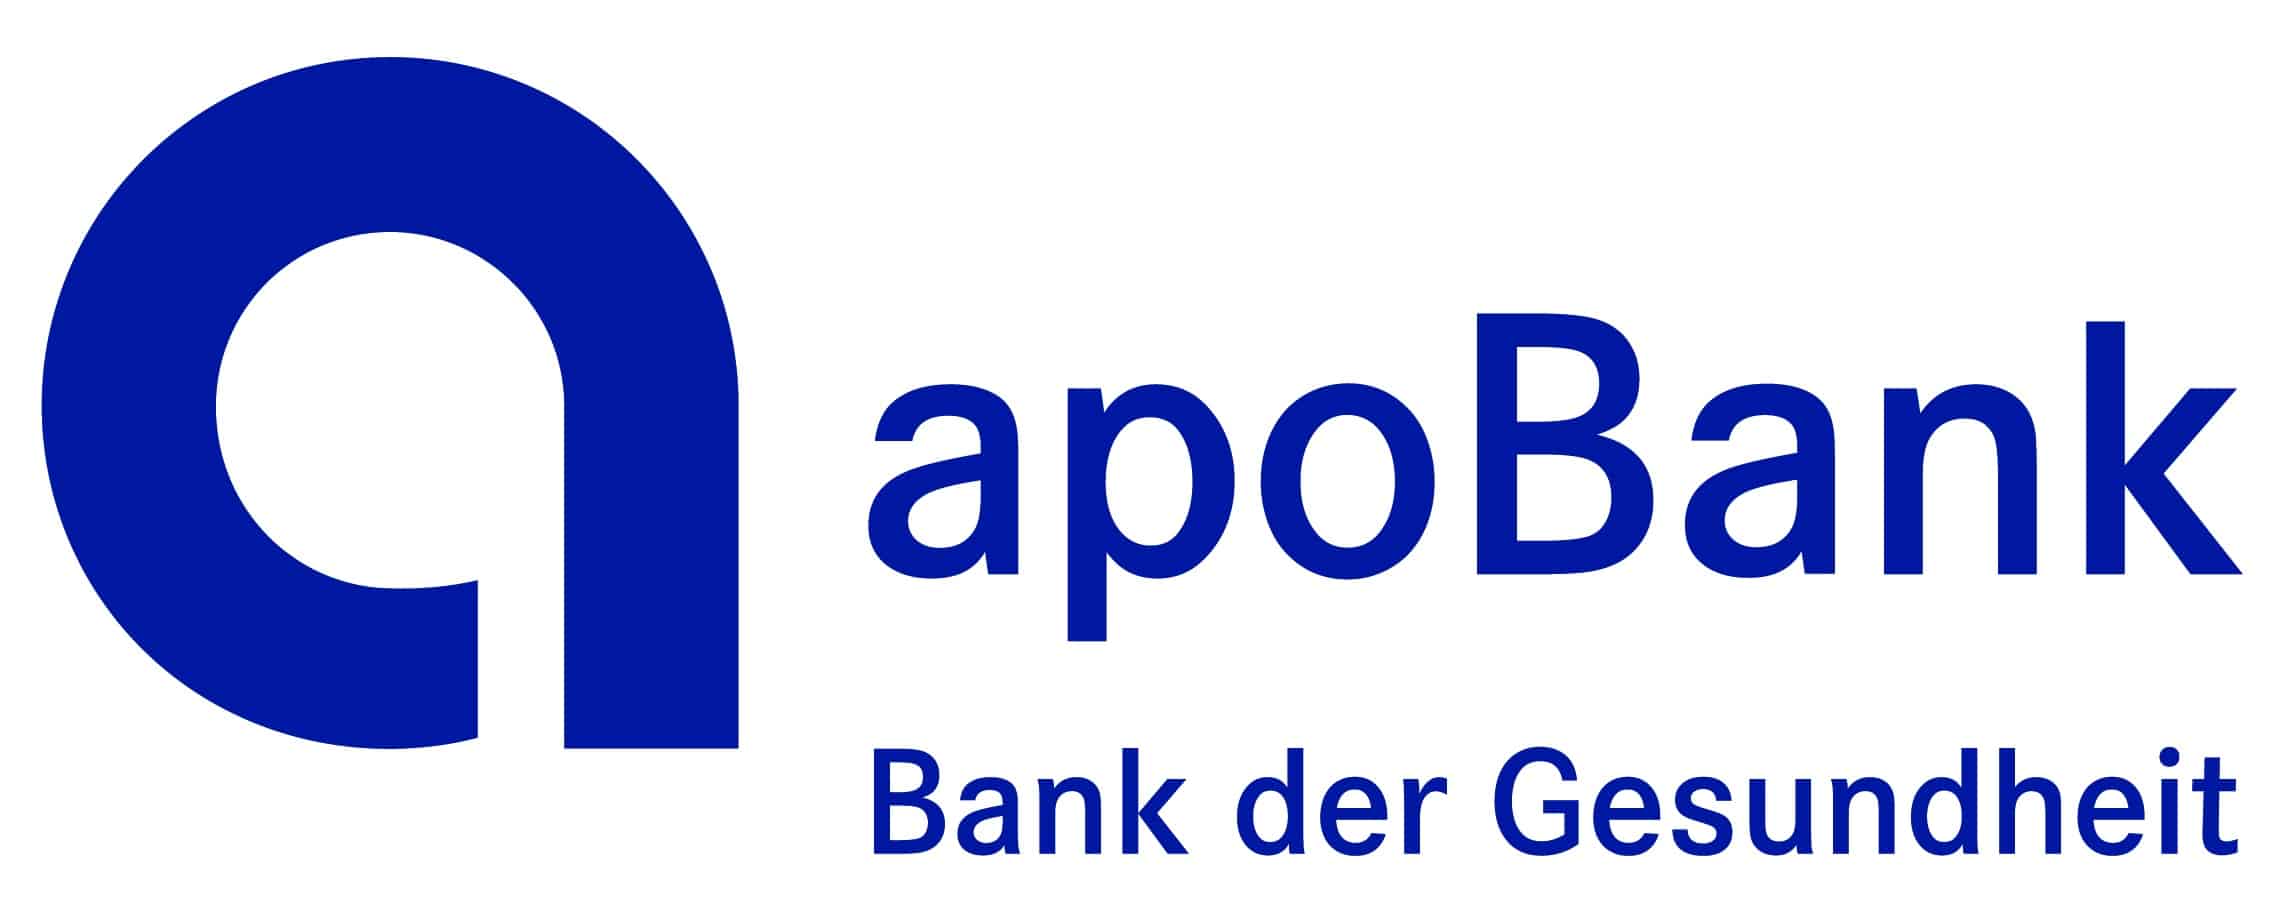 apobank_logo_2021_blau_4c